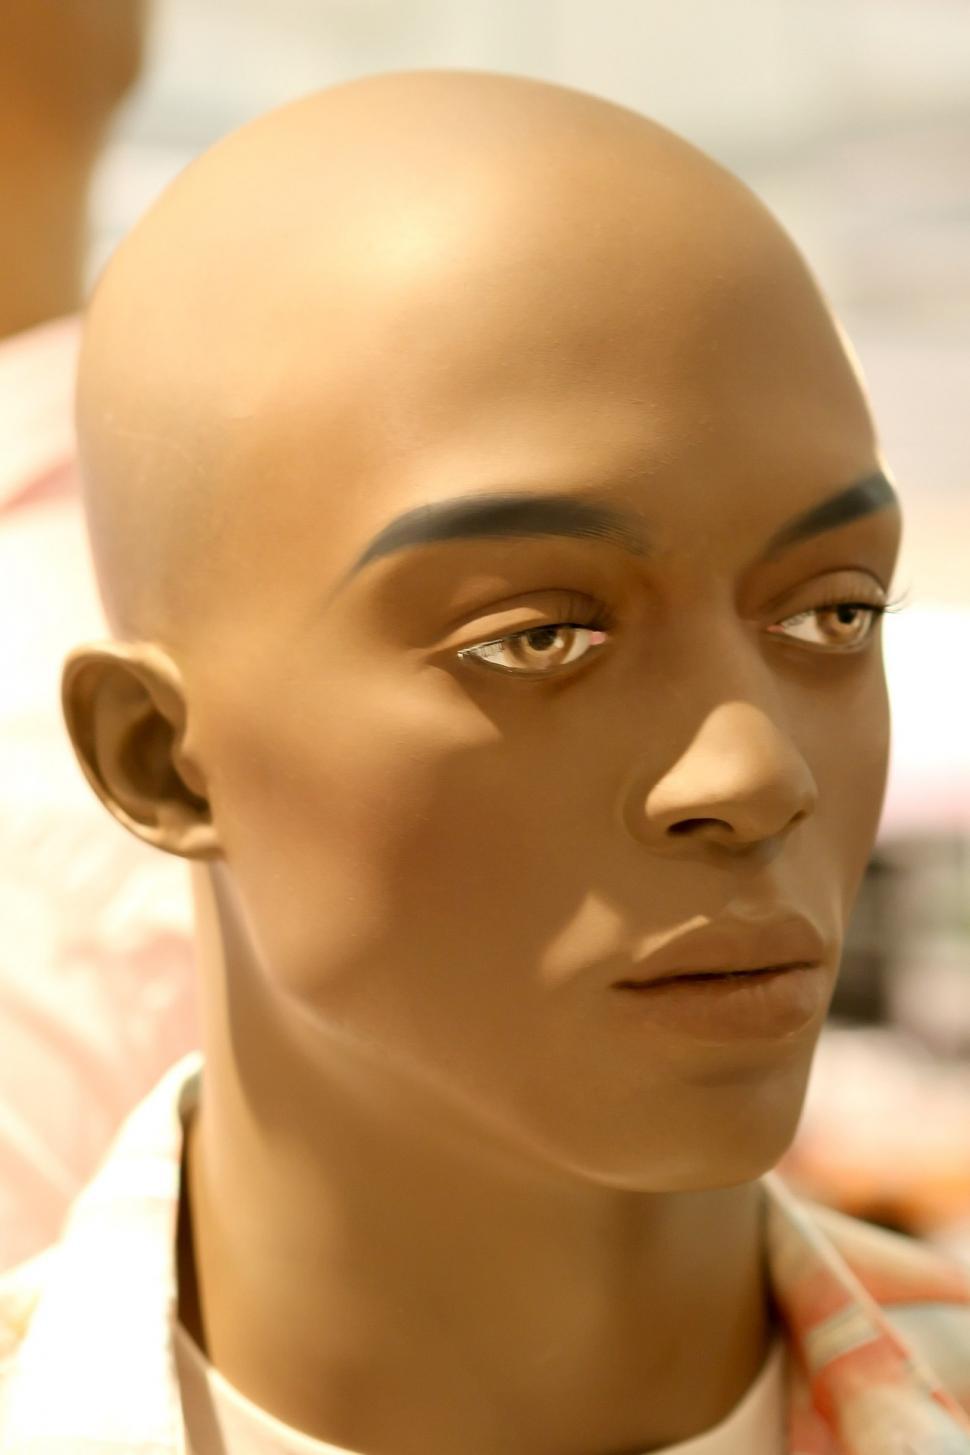 male mannequin face